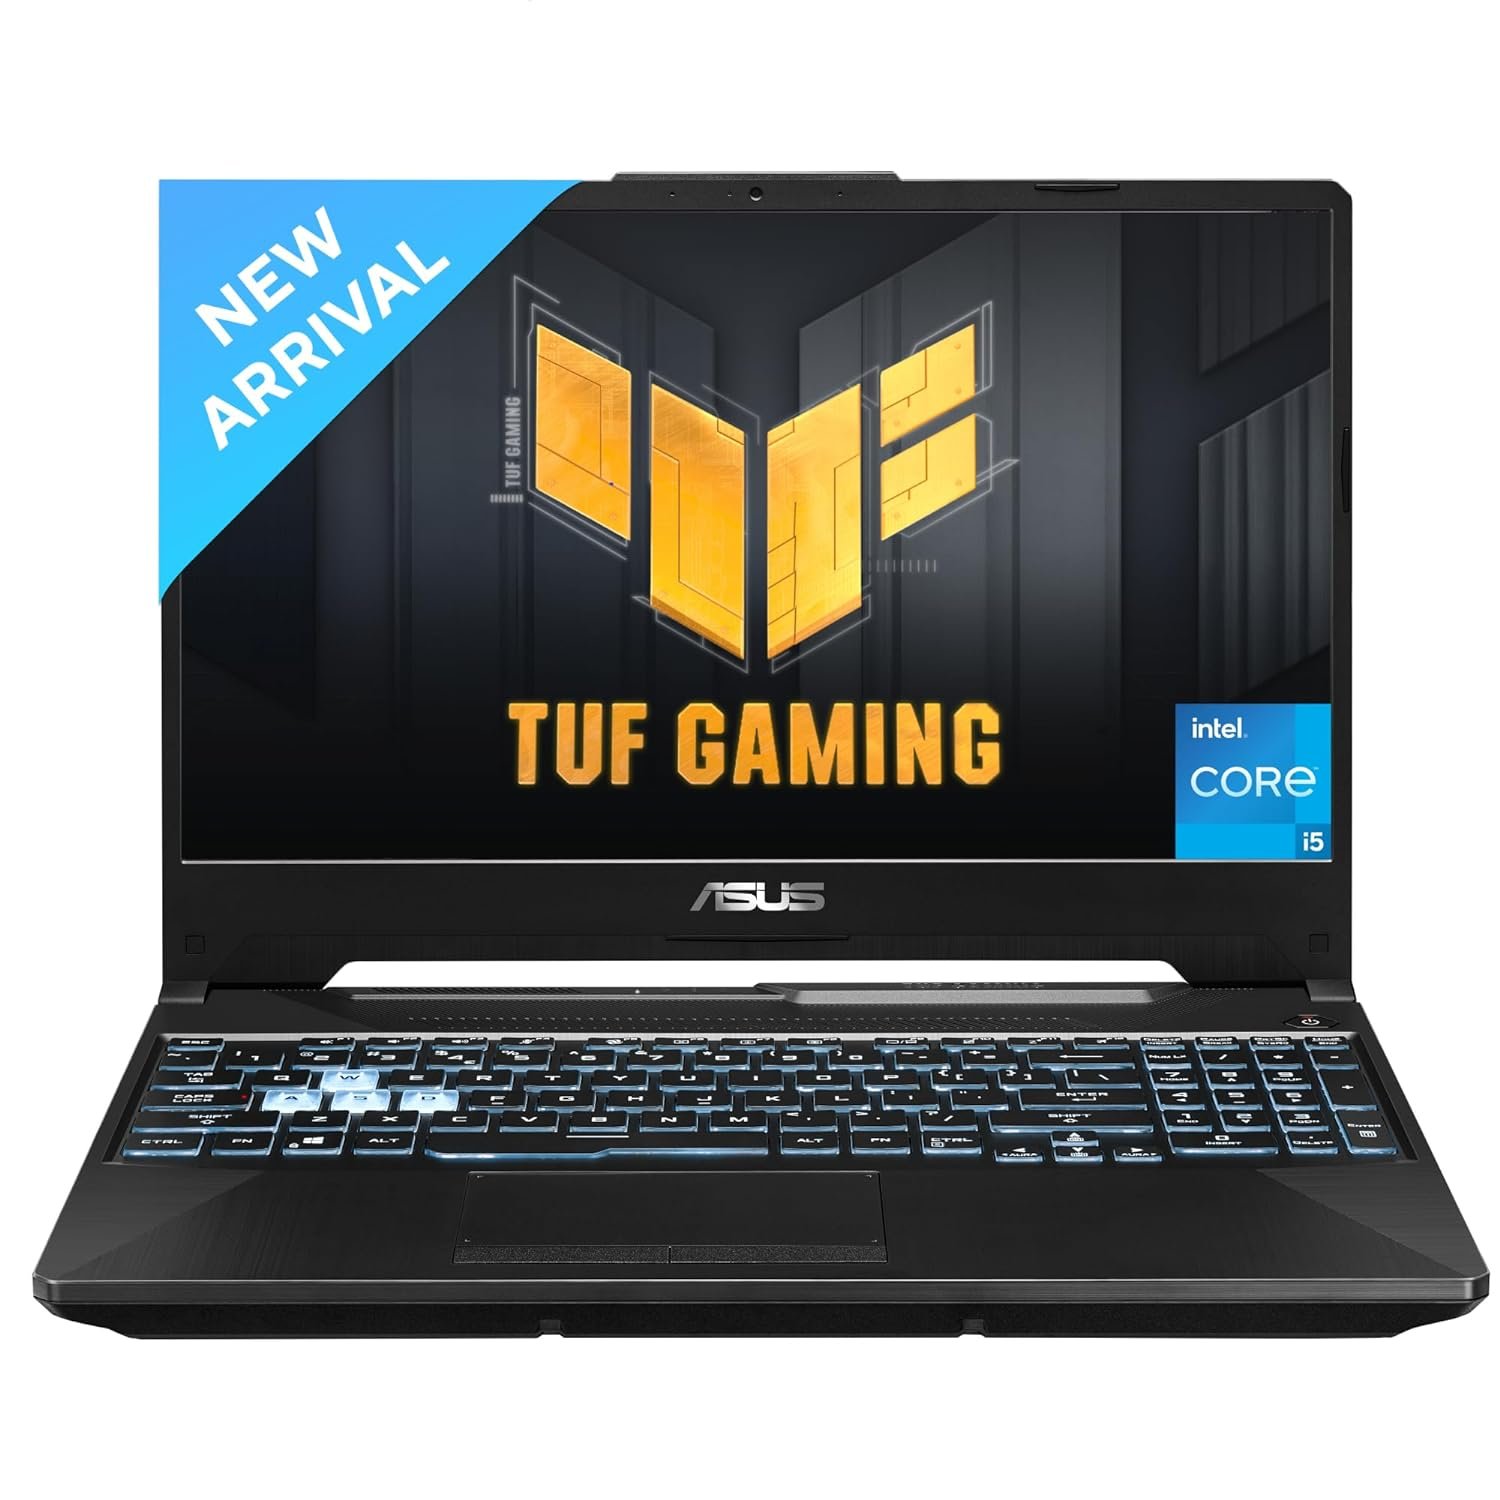 ASUS [SmartChoice] TUF Gaming Laptop F15, Intel Core i5-11400H 11th Gen, 15.6" (39.62 cm)